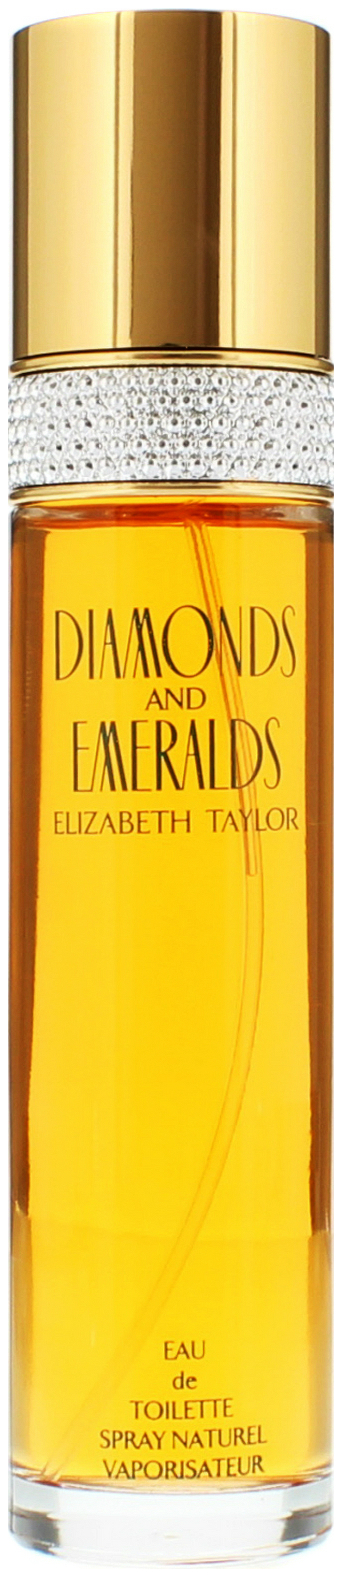 Туалетная вода Elizabeth Taylor Diamonds And Emeralds 100 мл